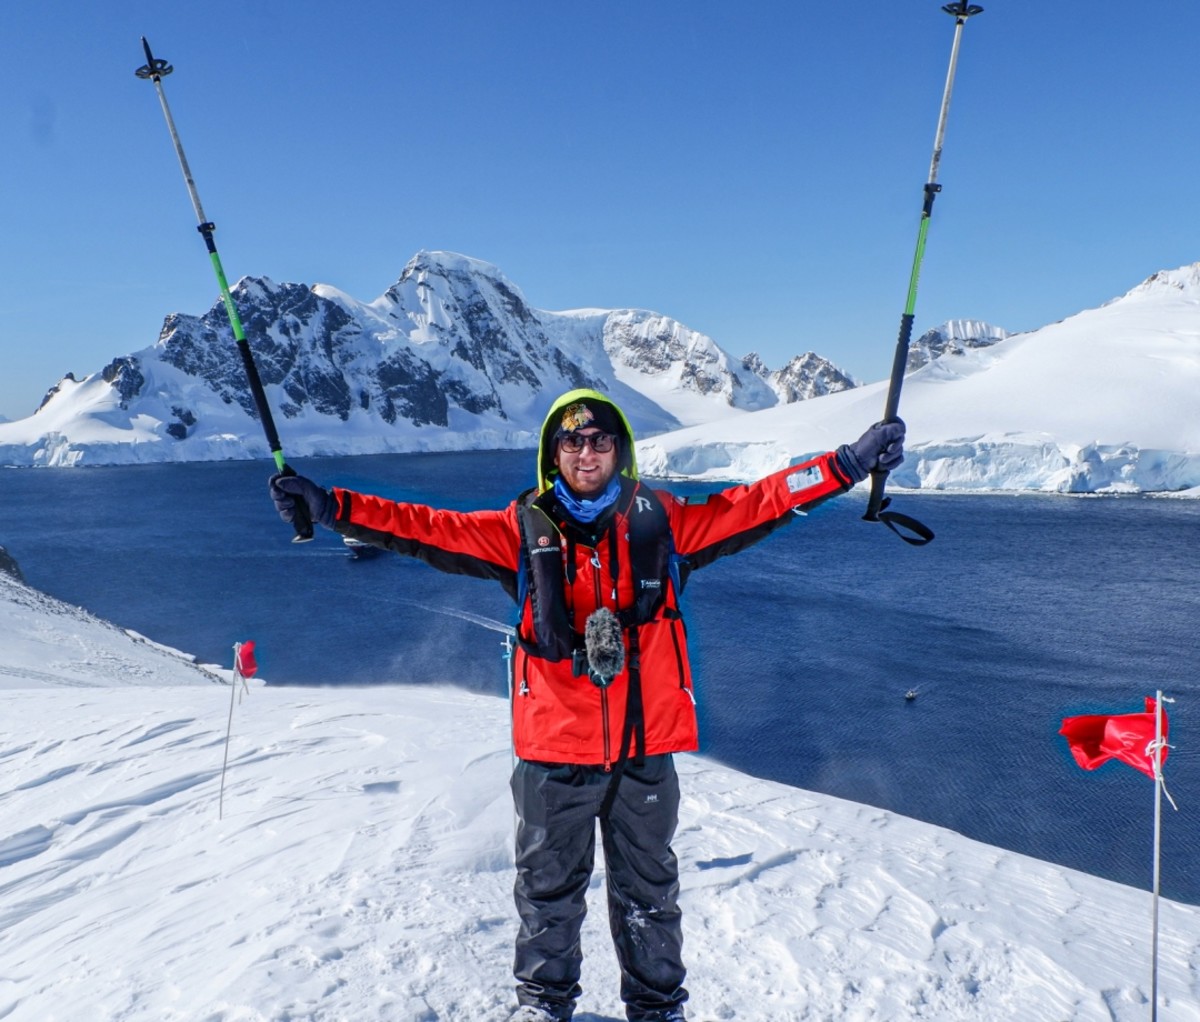 Drew Binsky in a red winter jacket standing on top of a snowy mountain